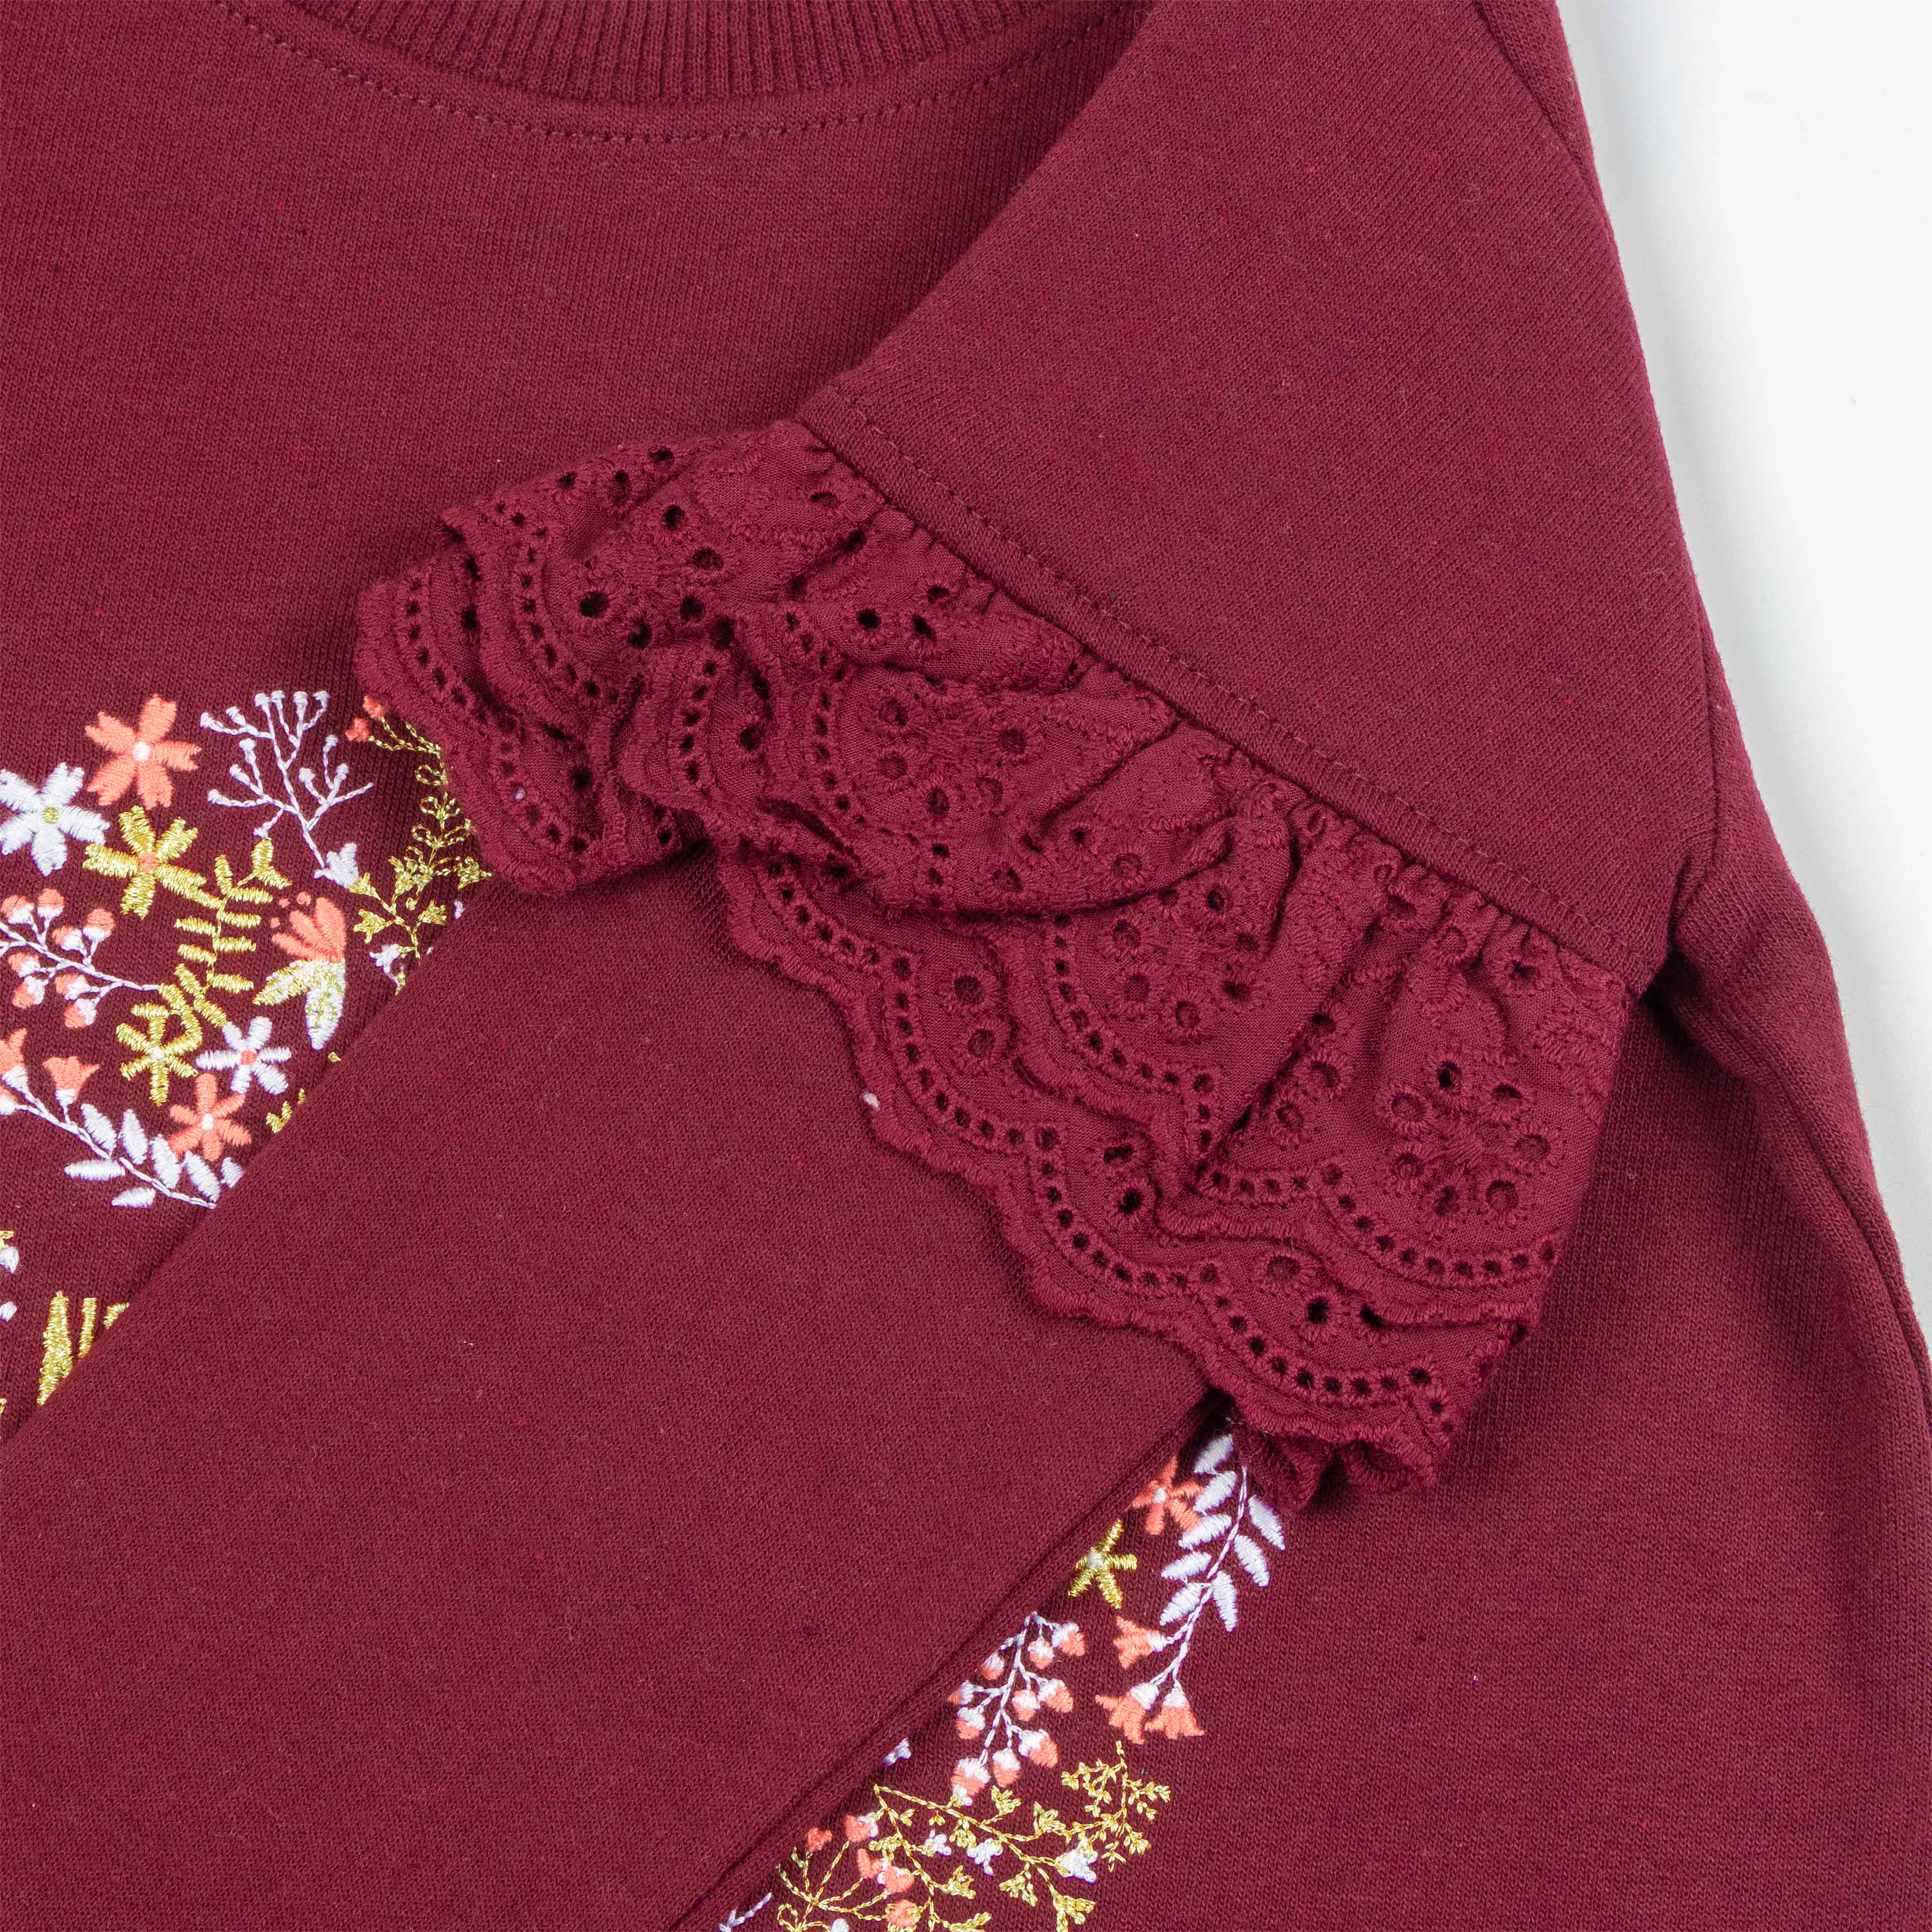 Girls Full Sleeve Never Stop Exploring Embroidery Sweatshirt